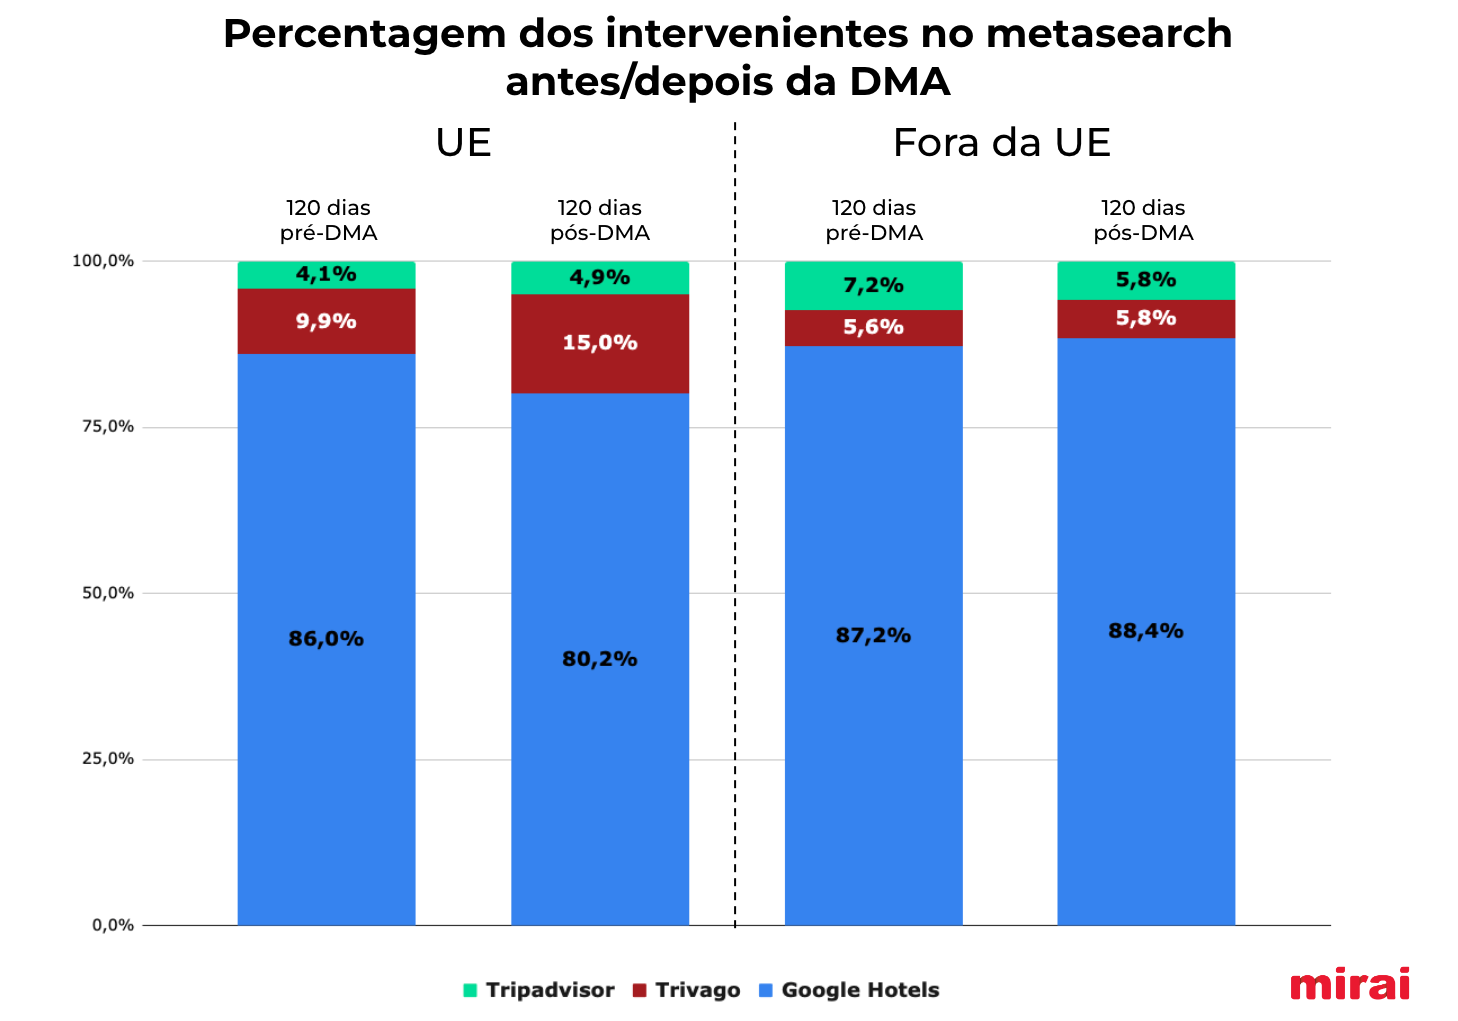 Percentagem intervenientes metasearch DMA mirai